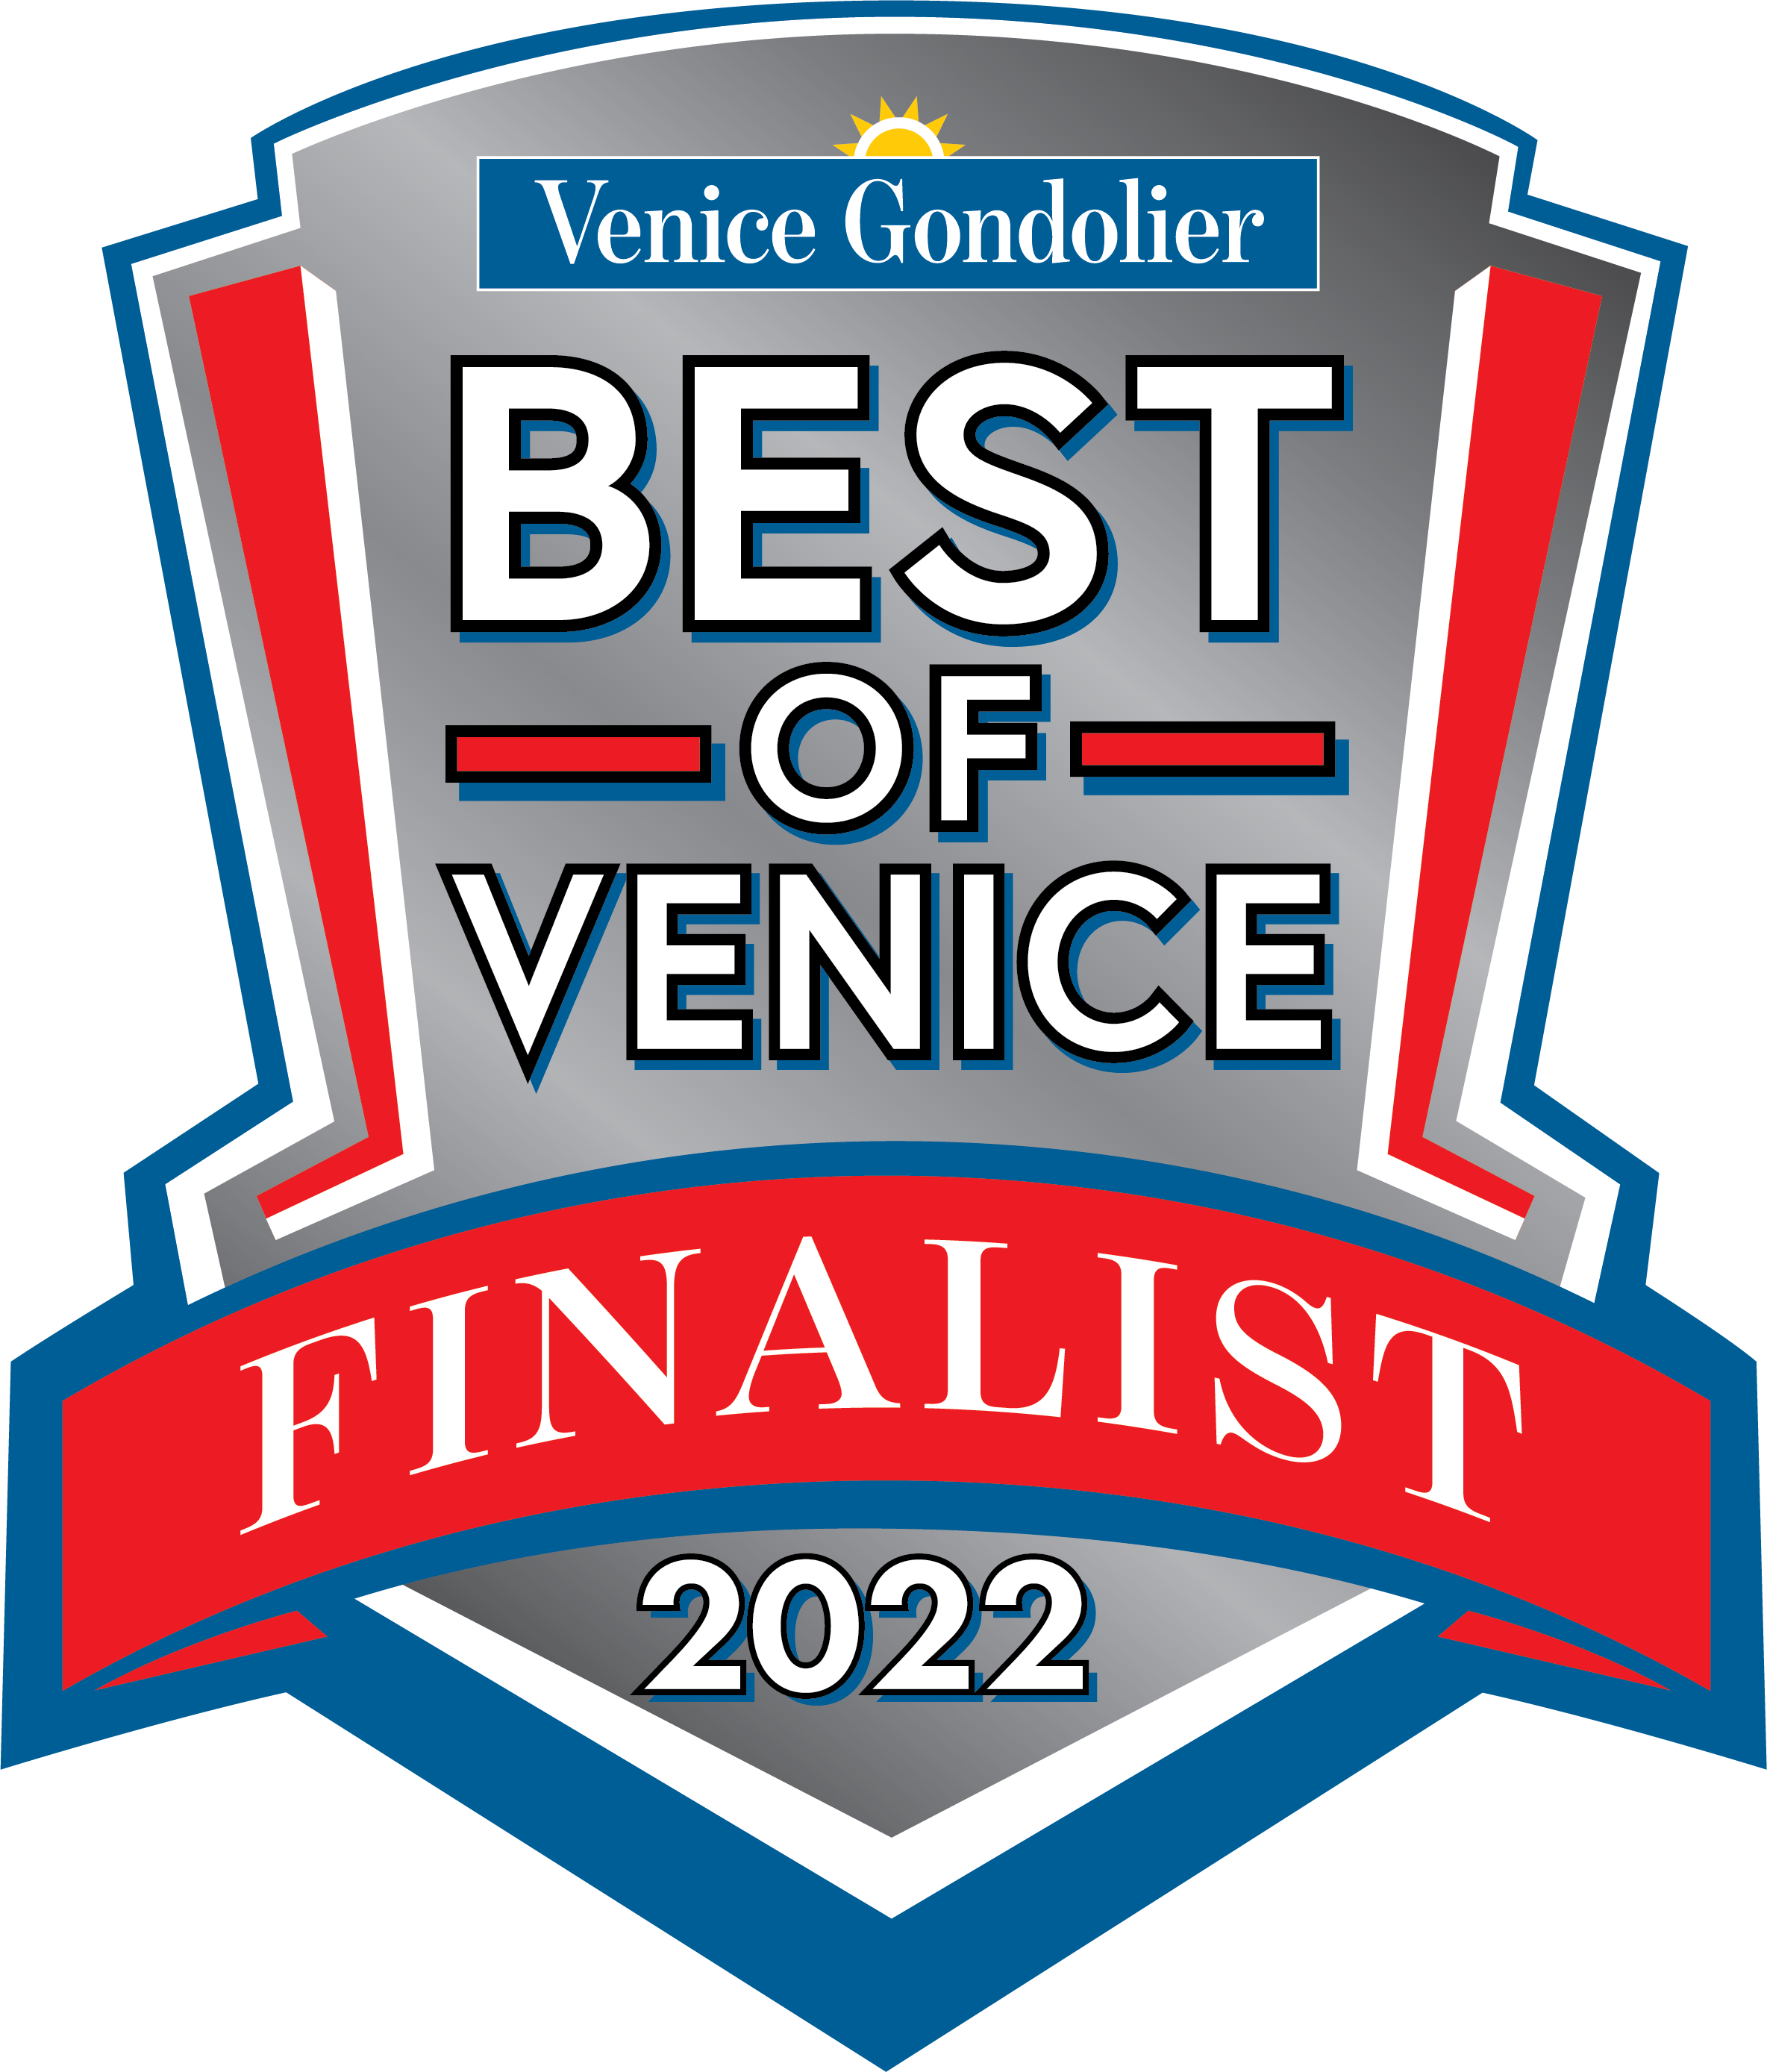 Best of Venice Finalist